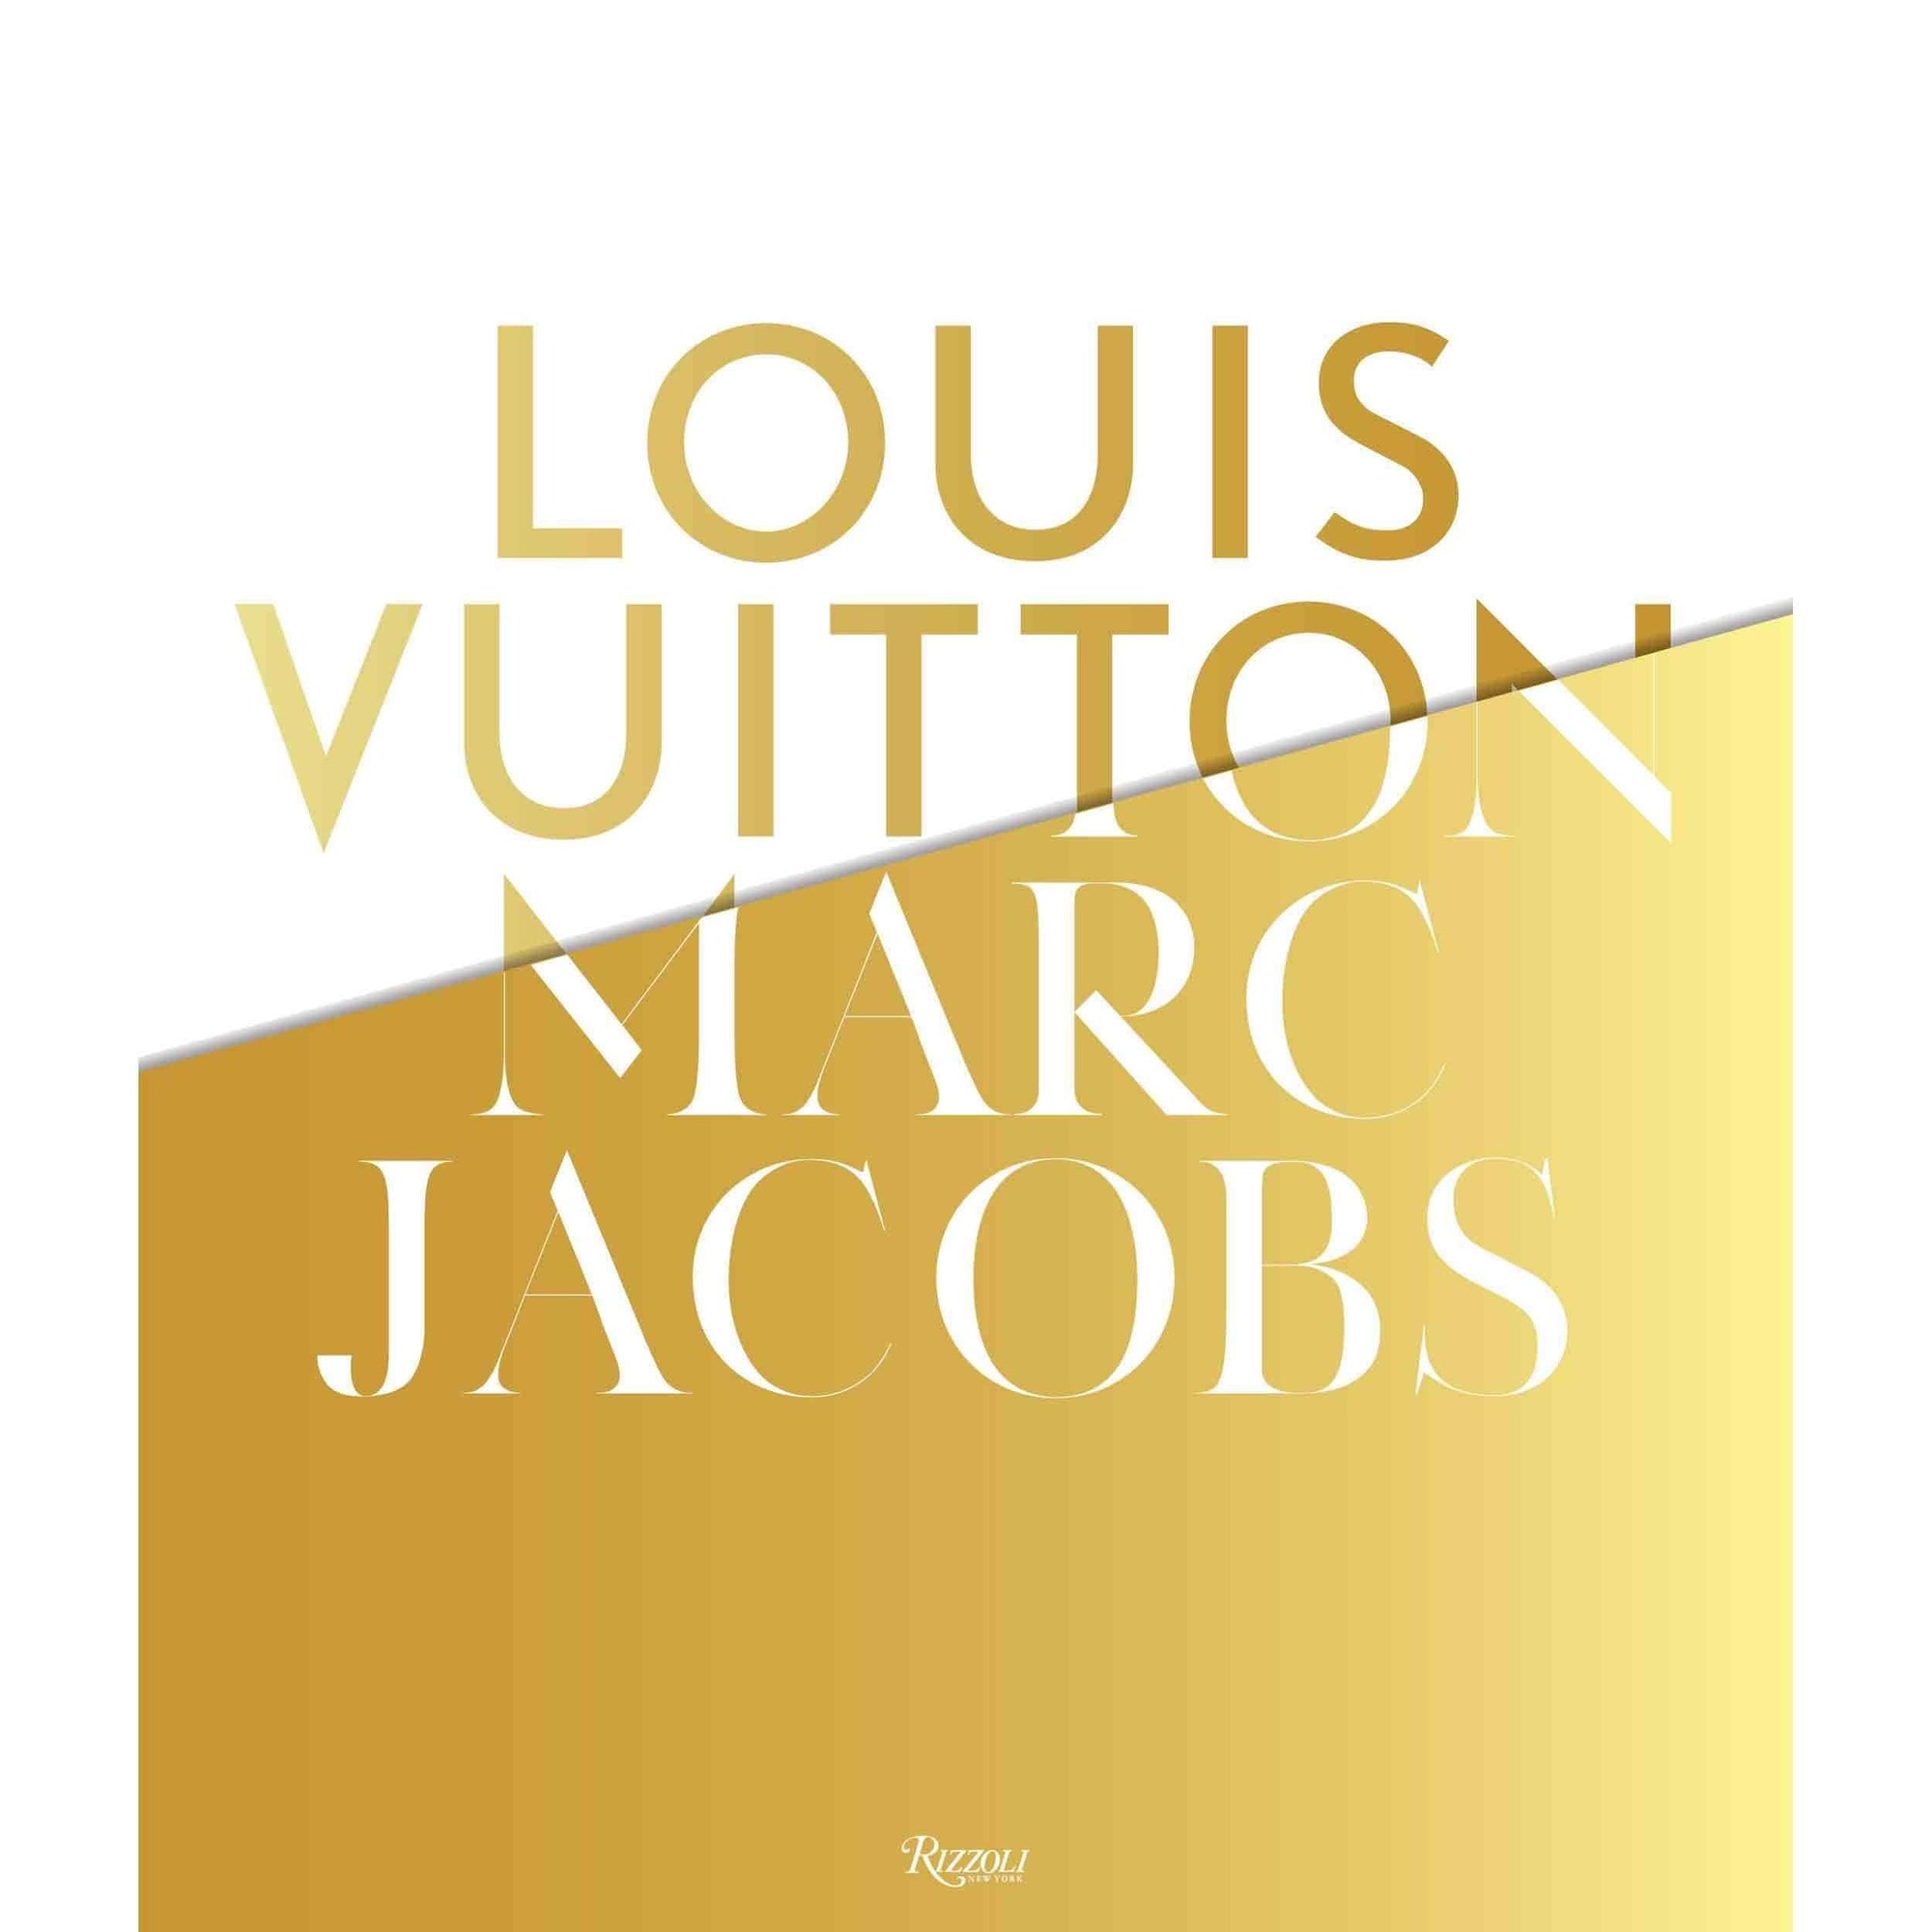 MARC JACOBS FOR LOUIS VUITTON - News